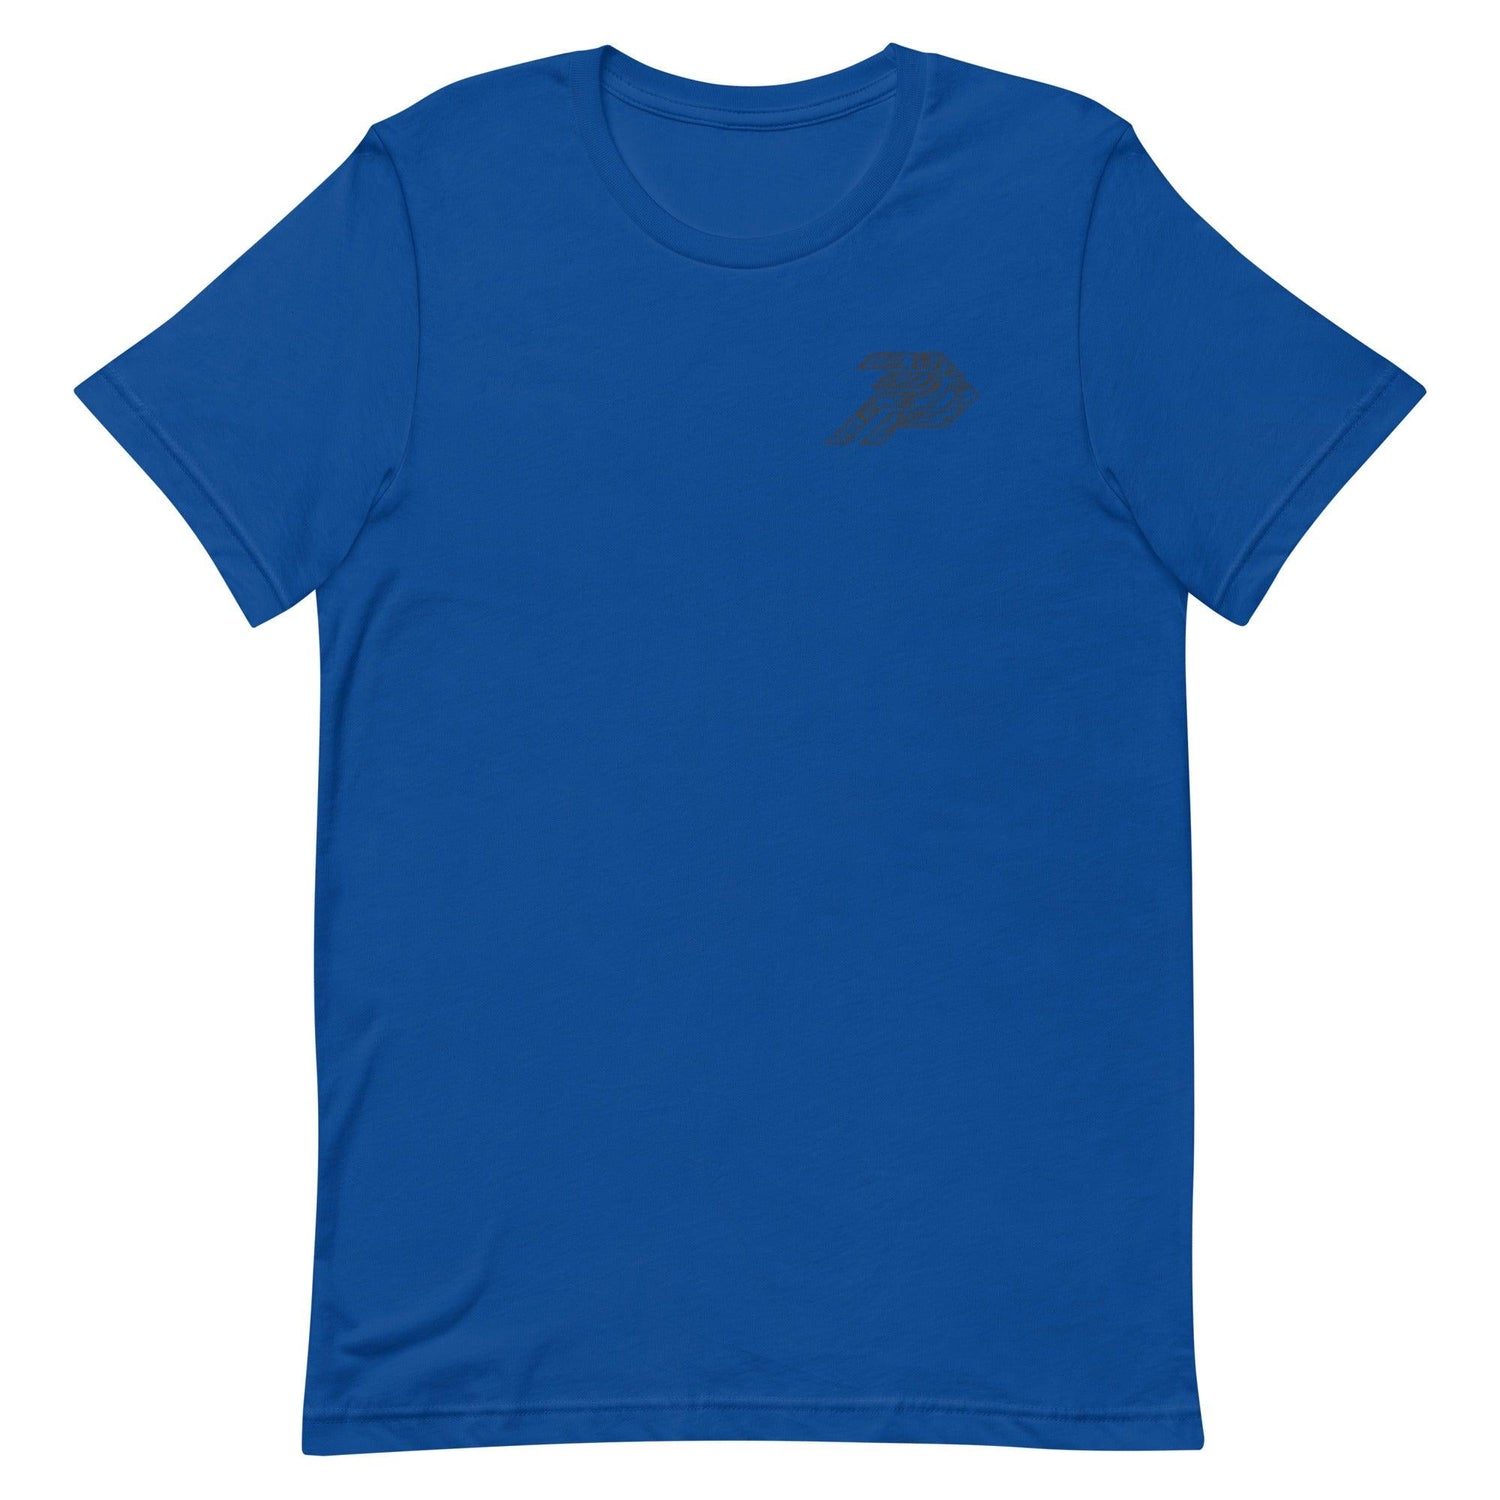 Phill Paea "Homegrown" t-shirt - Fan Arch